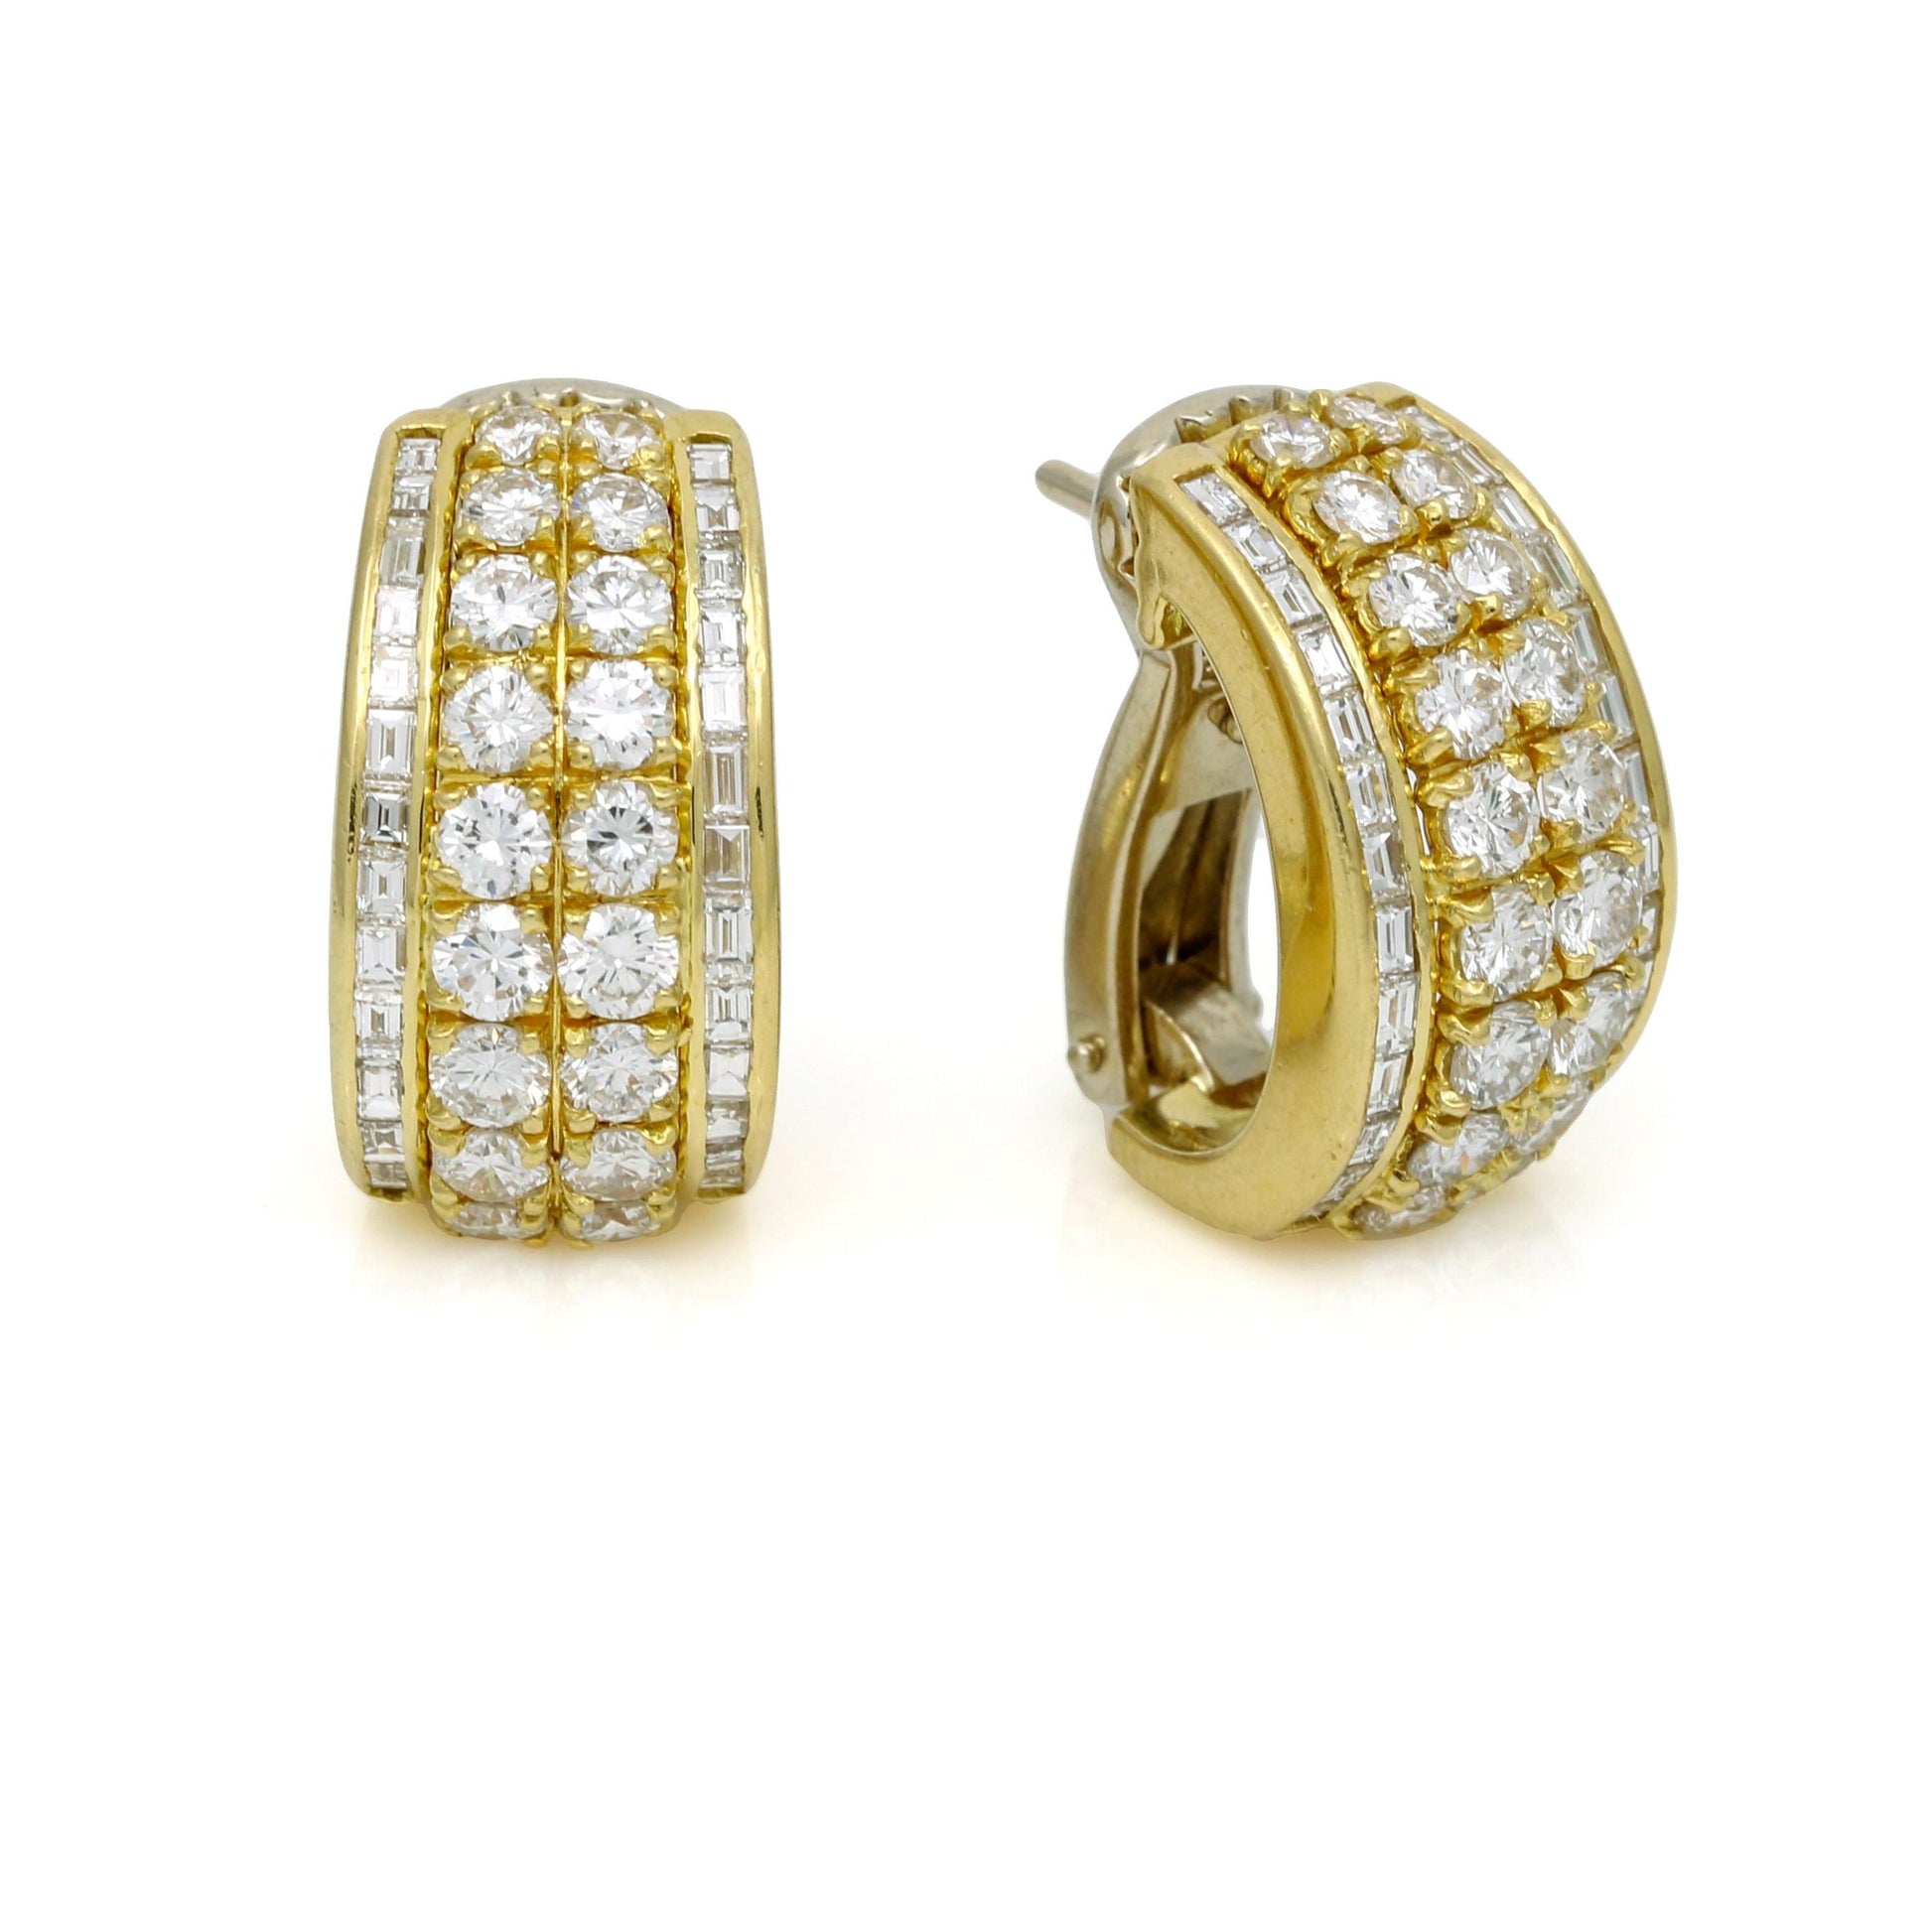 Fred of Paris Diamond C-Shaped Hoop Earrings in 18k Yellow Gold - 31 Jewels Inc.